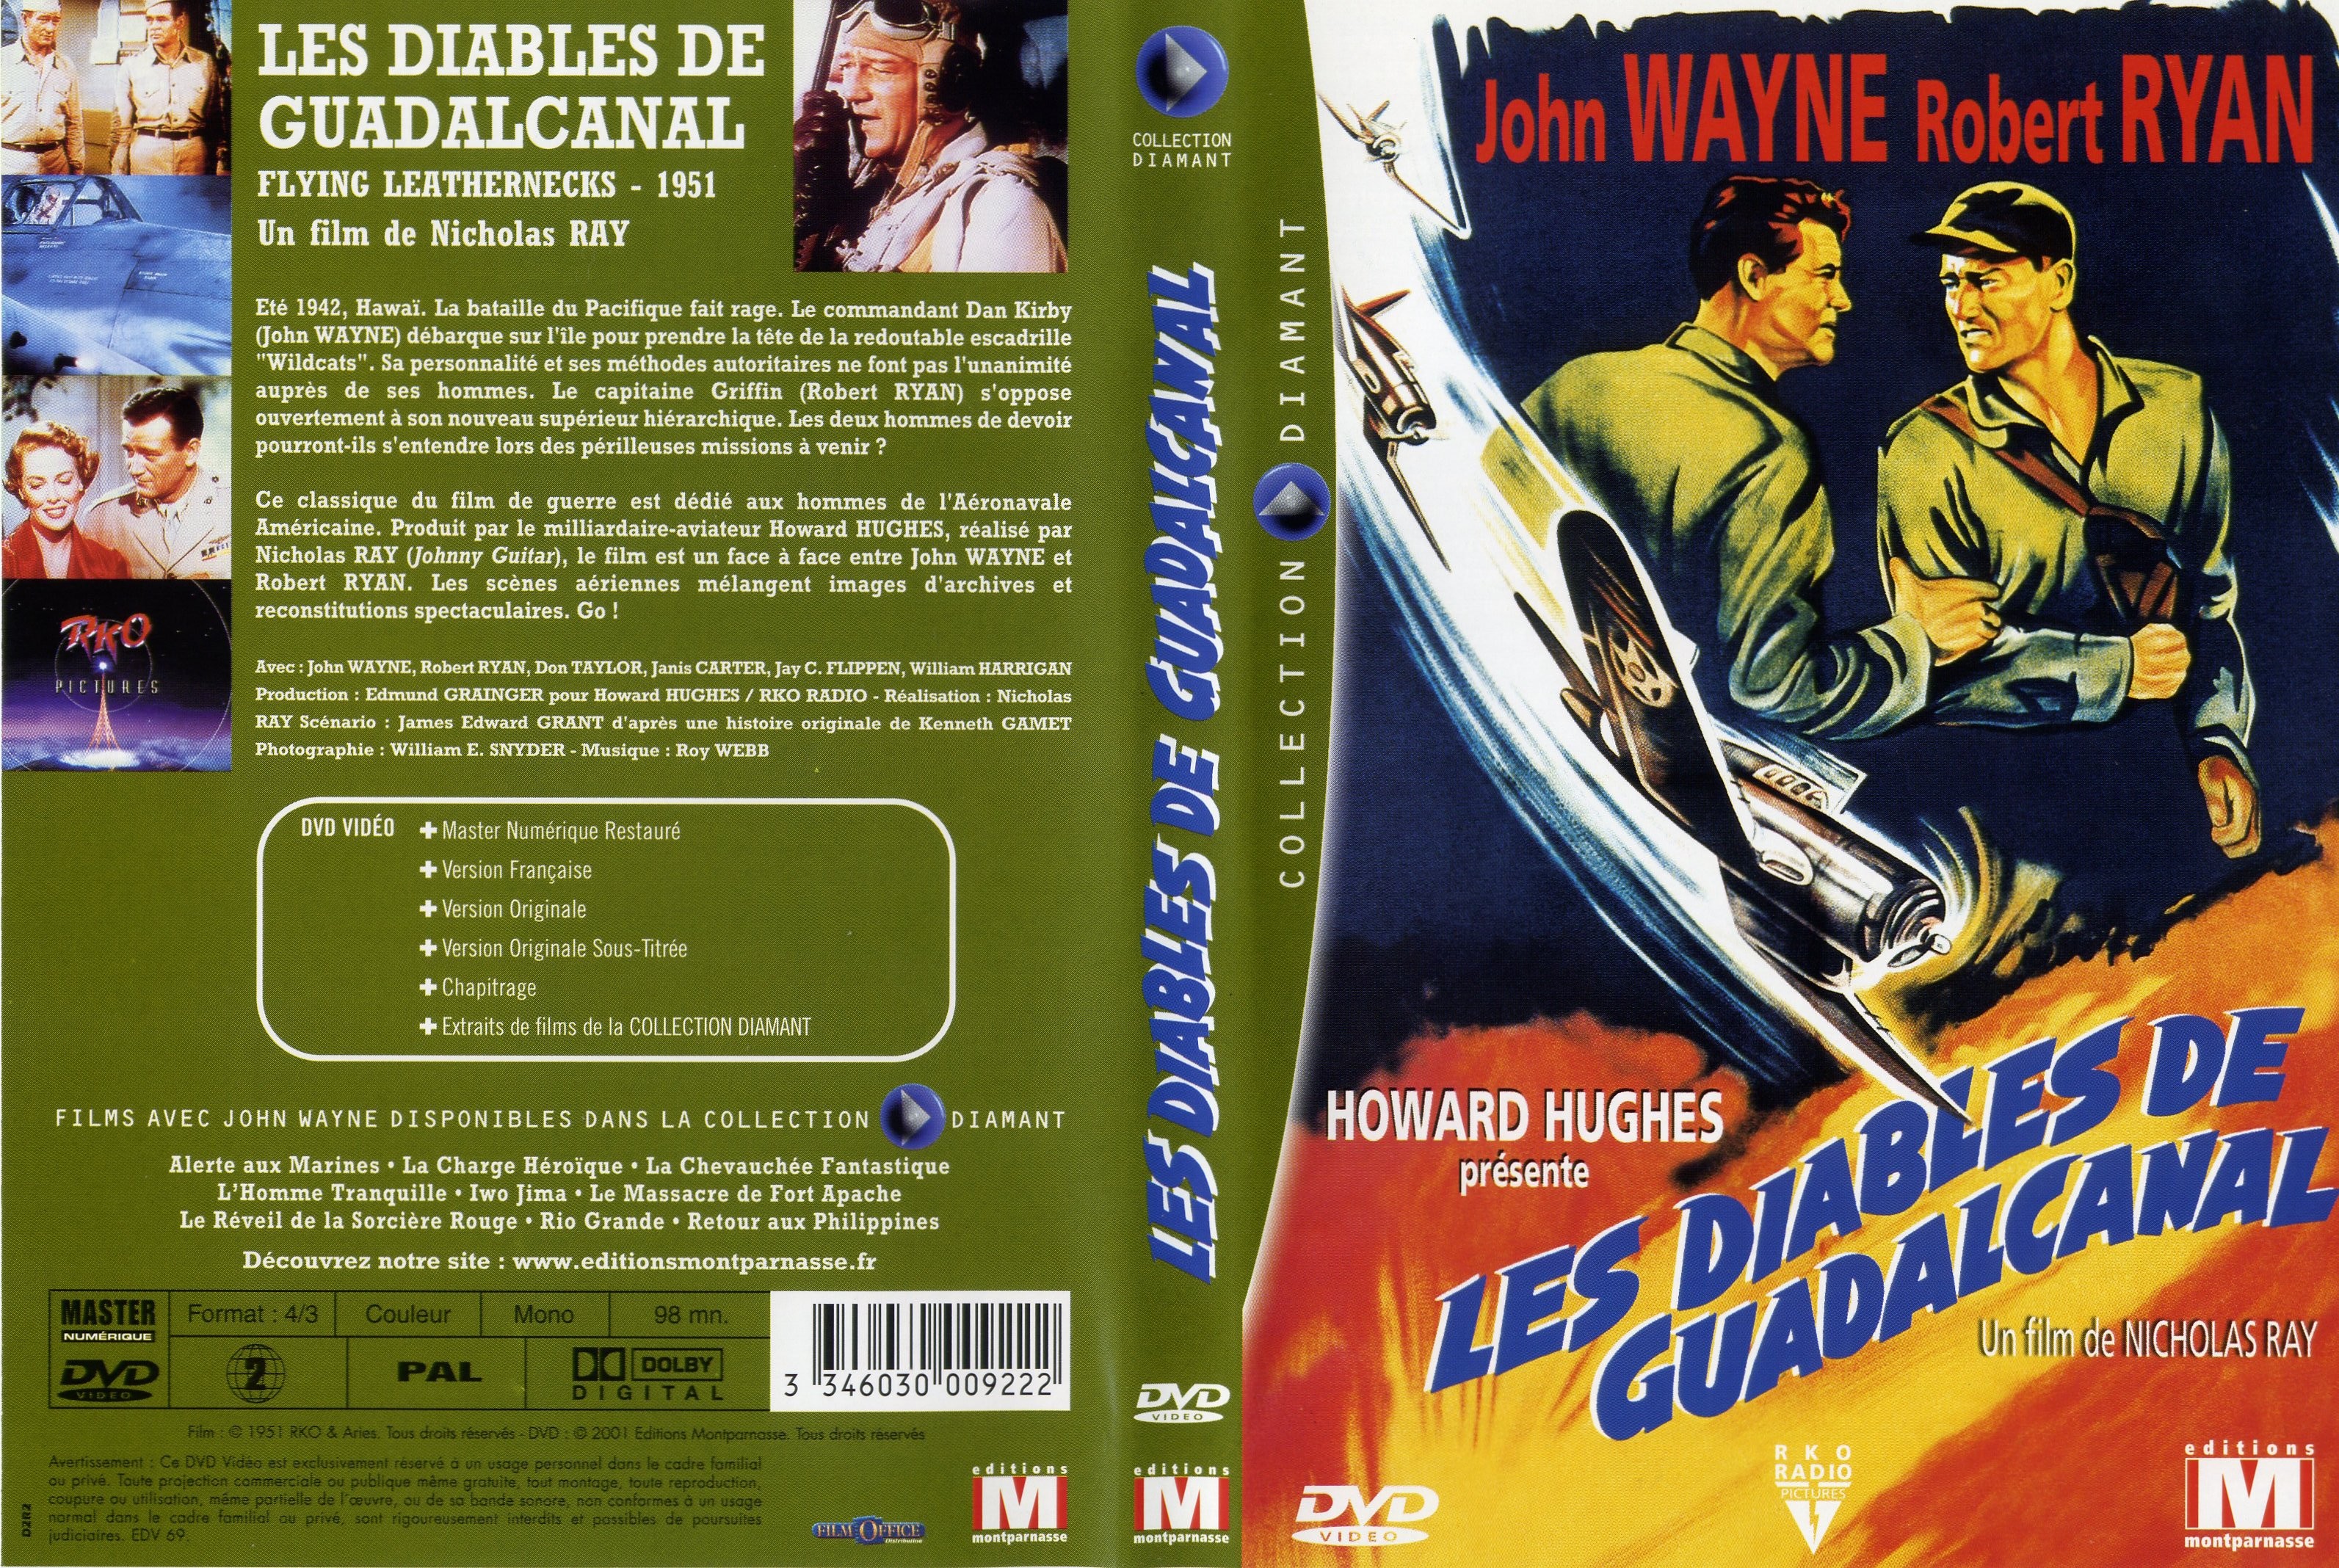 Jaquette DVD Les diables de guadalcanal v2